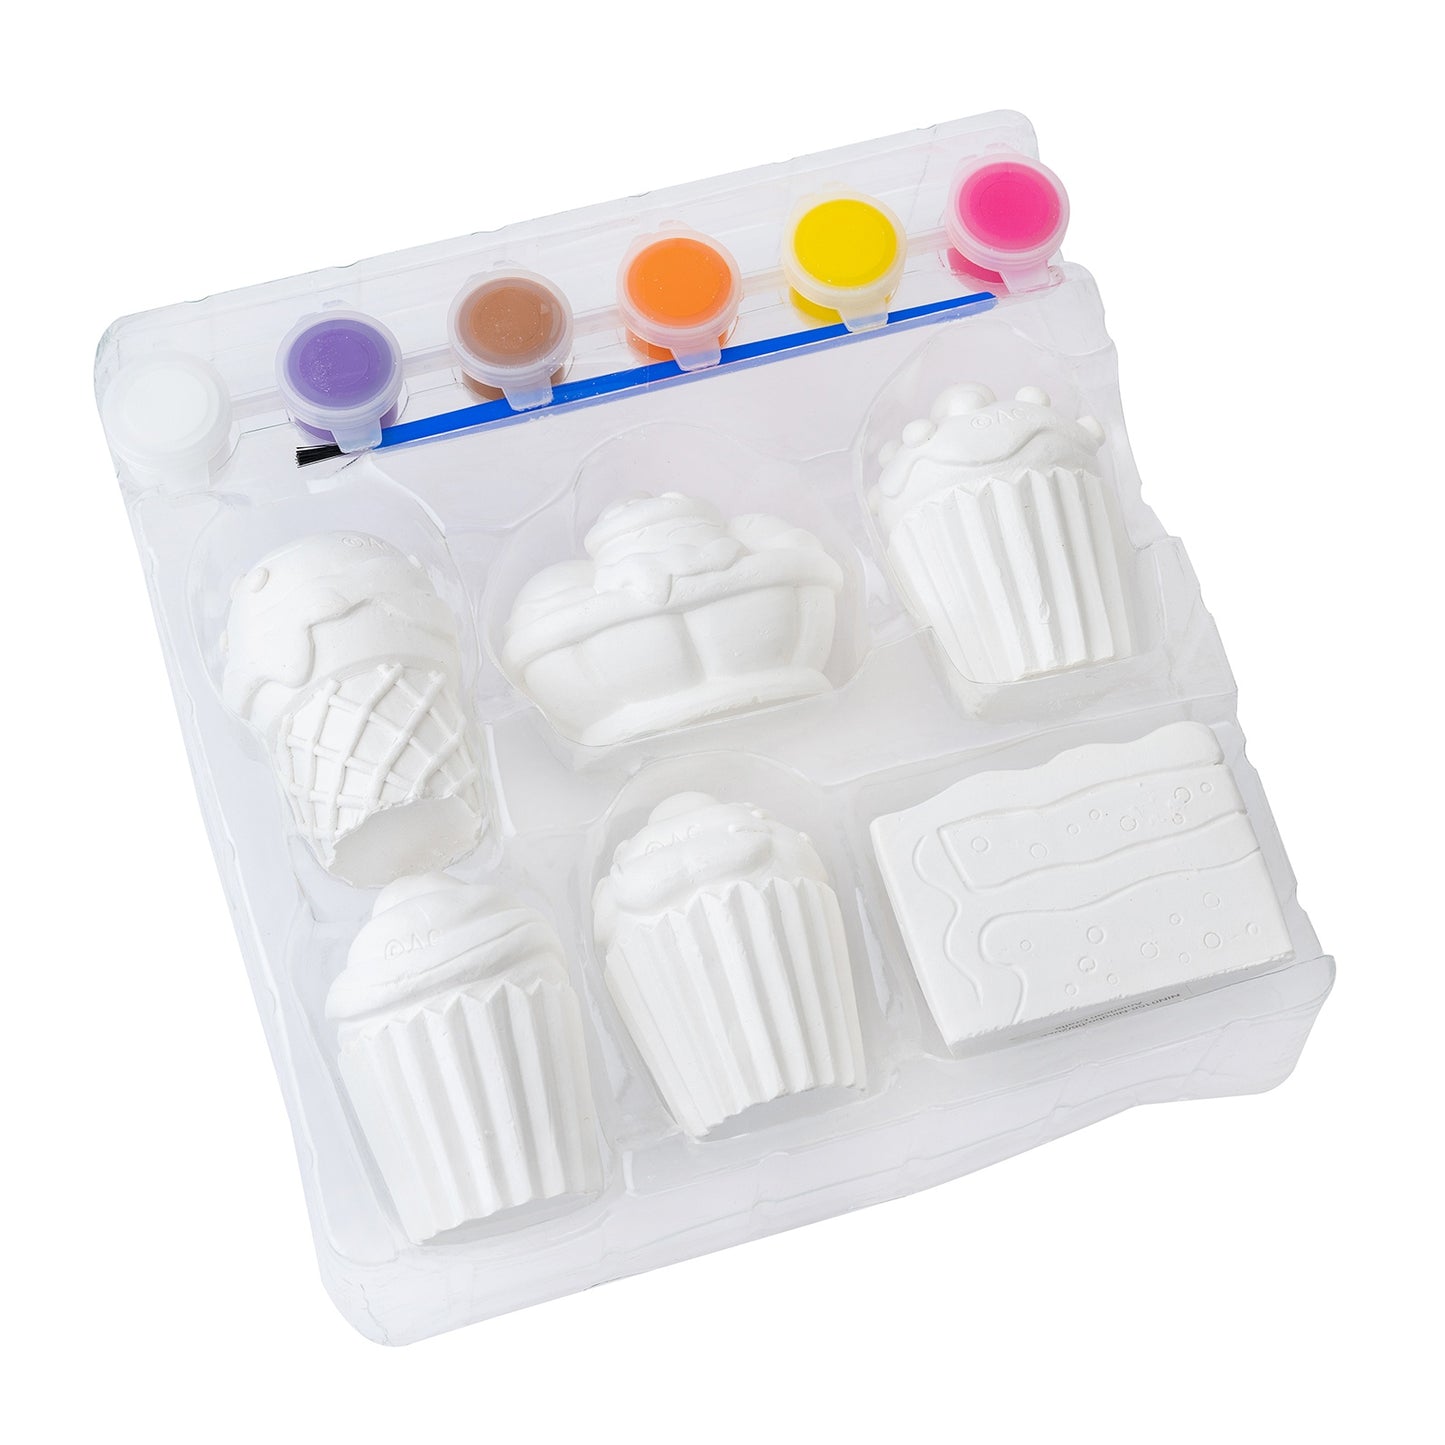 Colorbok Santa's Workshop Glitter Foam Stickers 6/Pkg-Sweets – American  Crafts